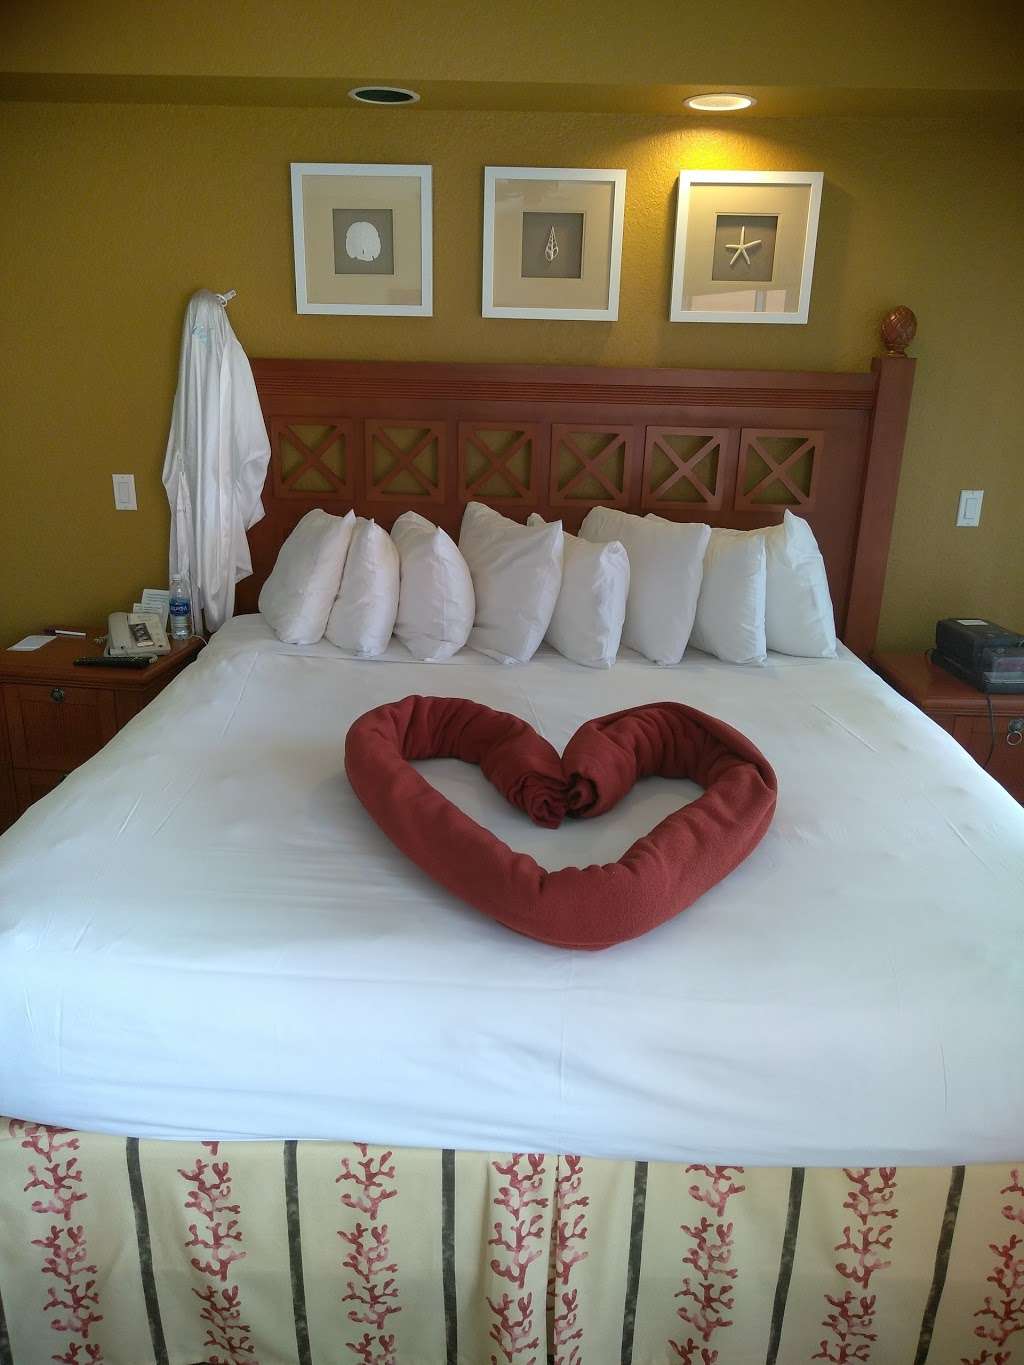 Hotel Westgate | 10000 Turkey Lake Rd, Orlando, FL 32819